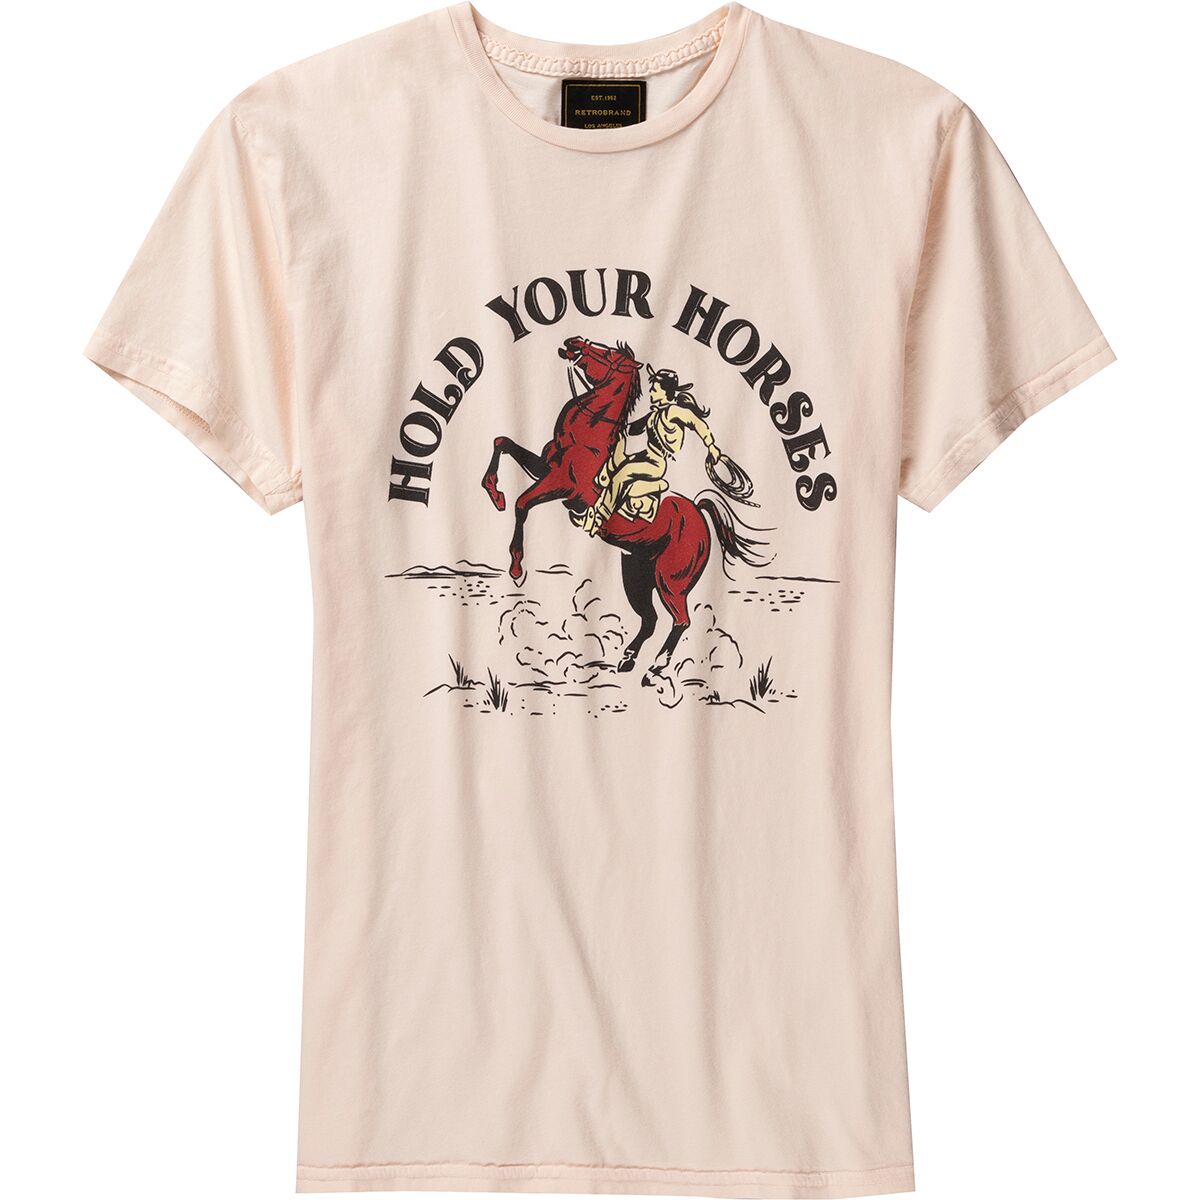 Original Retro Brand Hold Your Horses T-Shirt - Women's